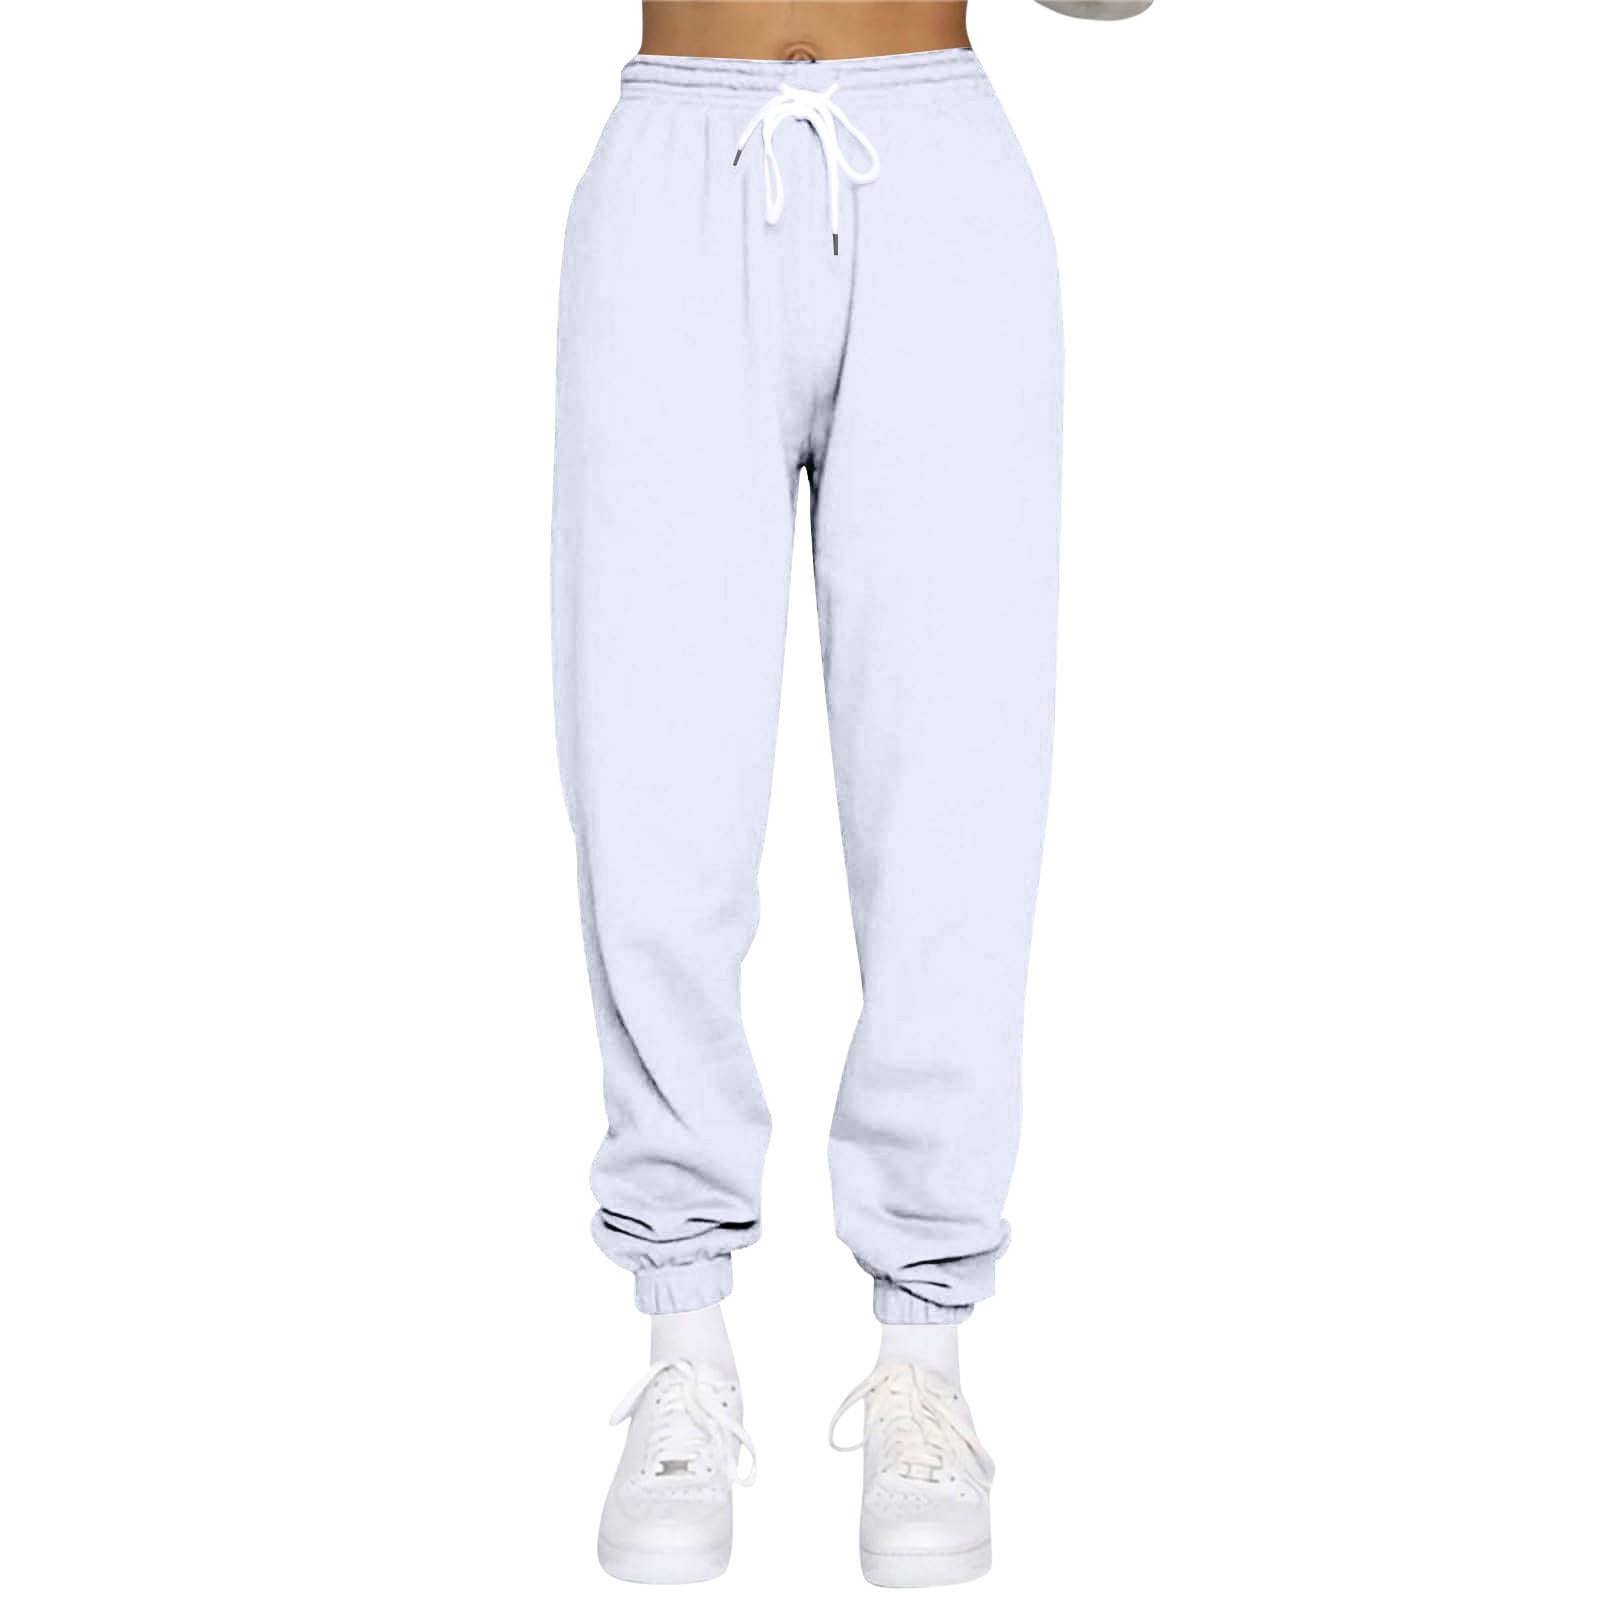 safuny Women's Winter Sweatpants Thick Fleece Pants Jogger Pocket